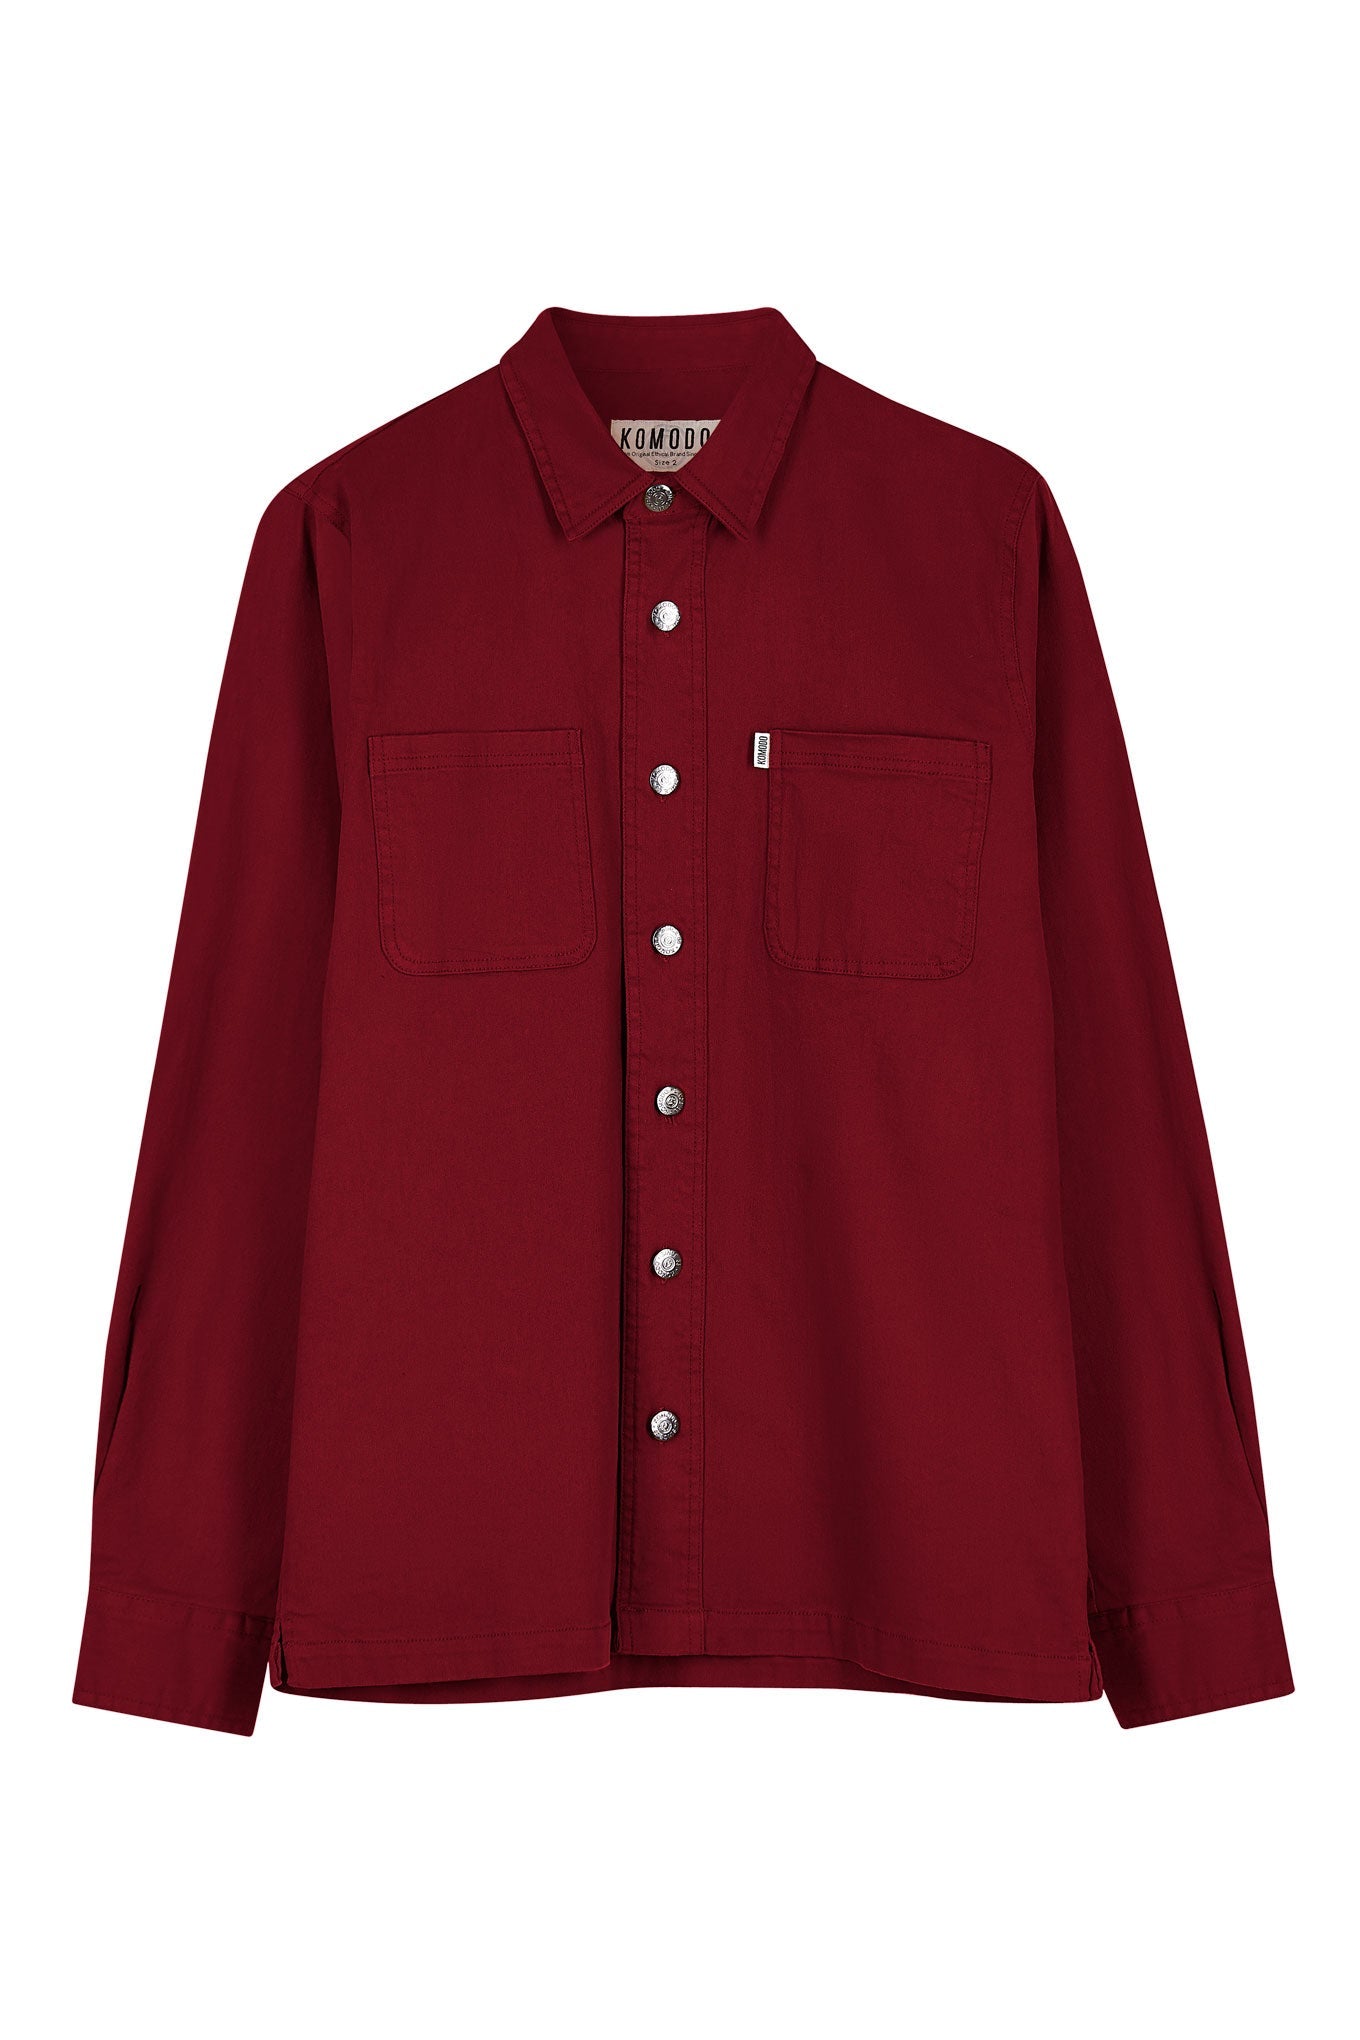 Jean Cotton Overshirt Wine Red